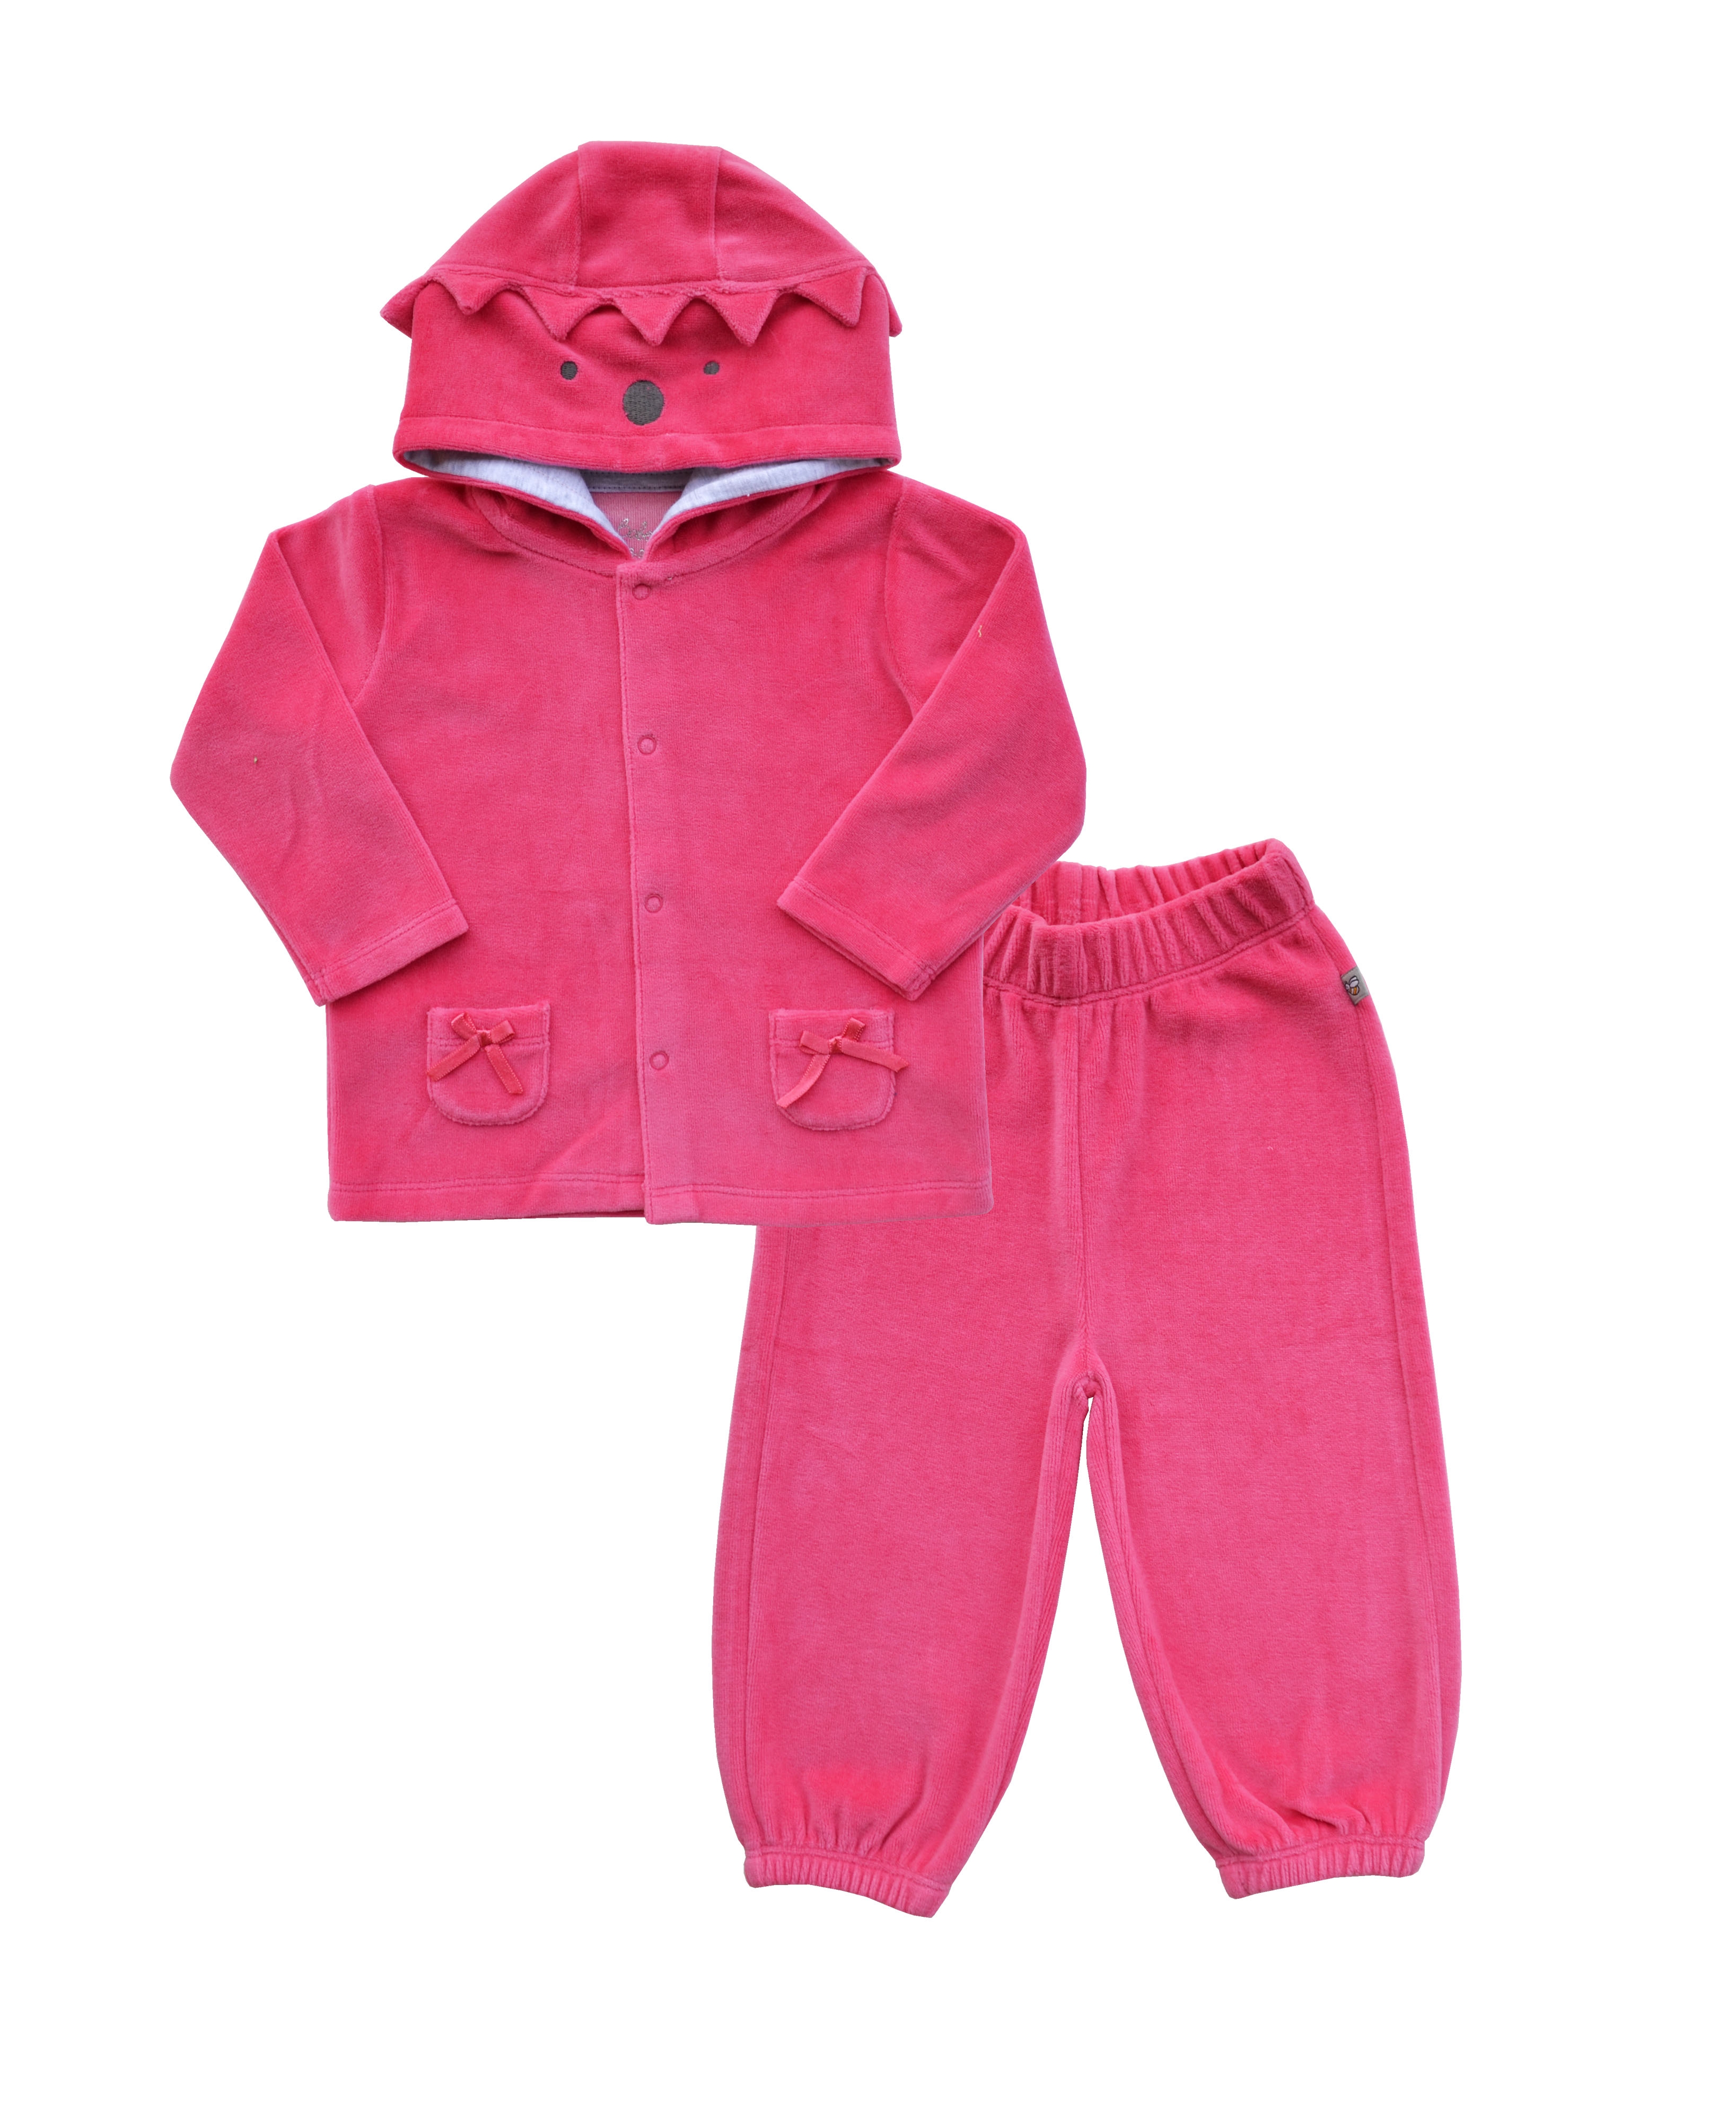 Pink Long Sleeves hoody Jacket and Pink Pant(Velour)